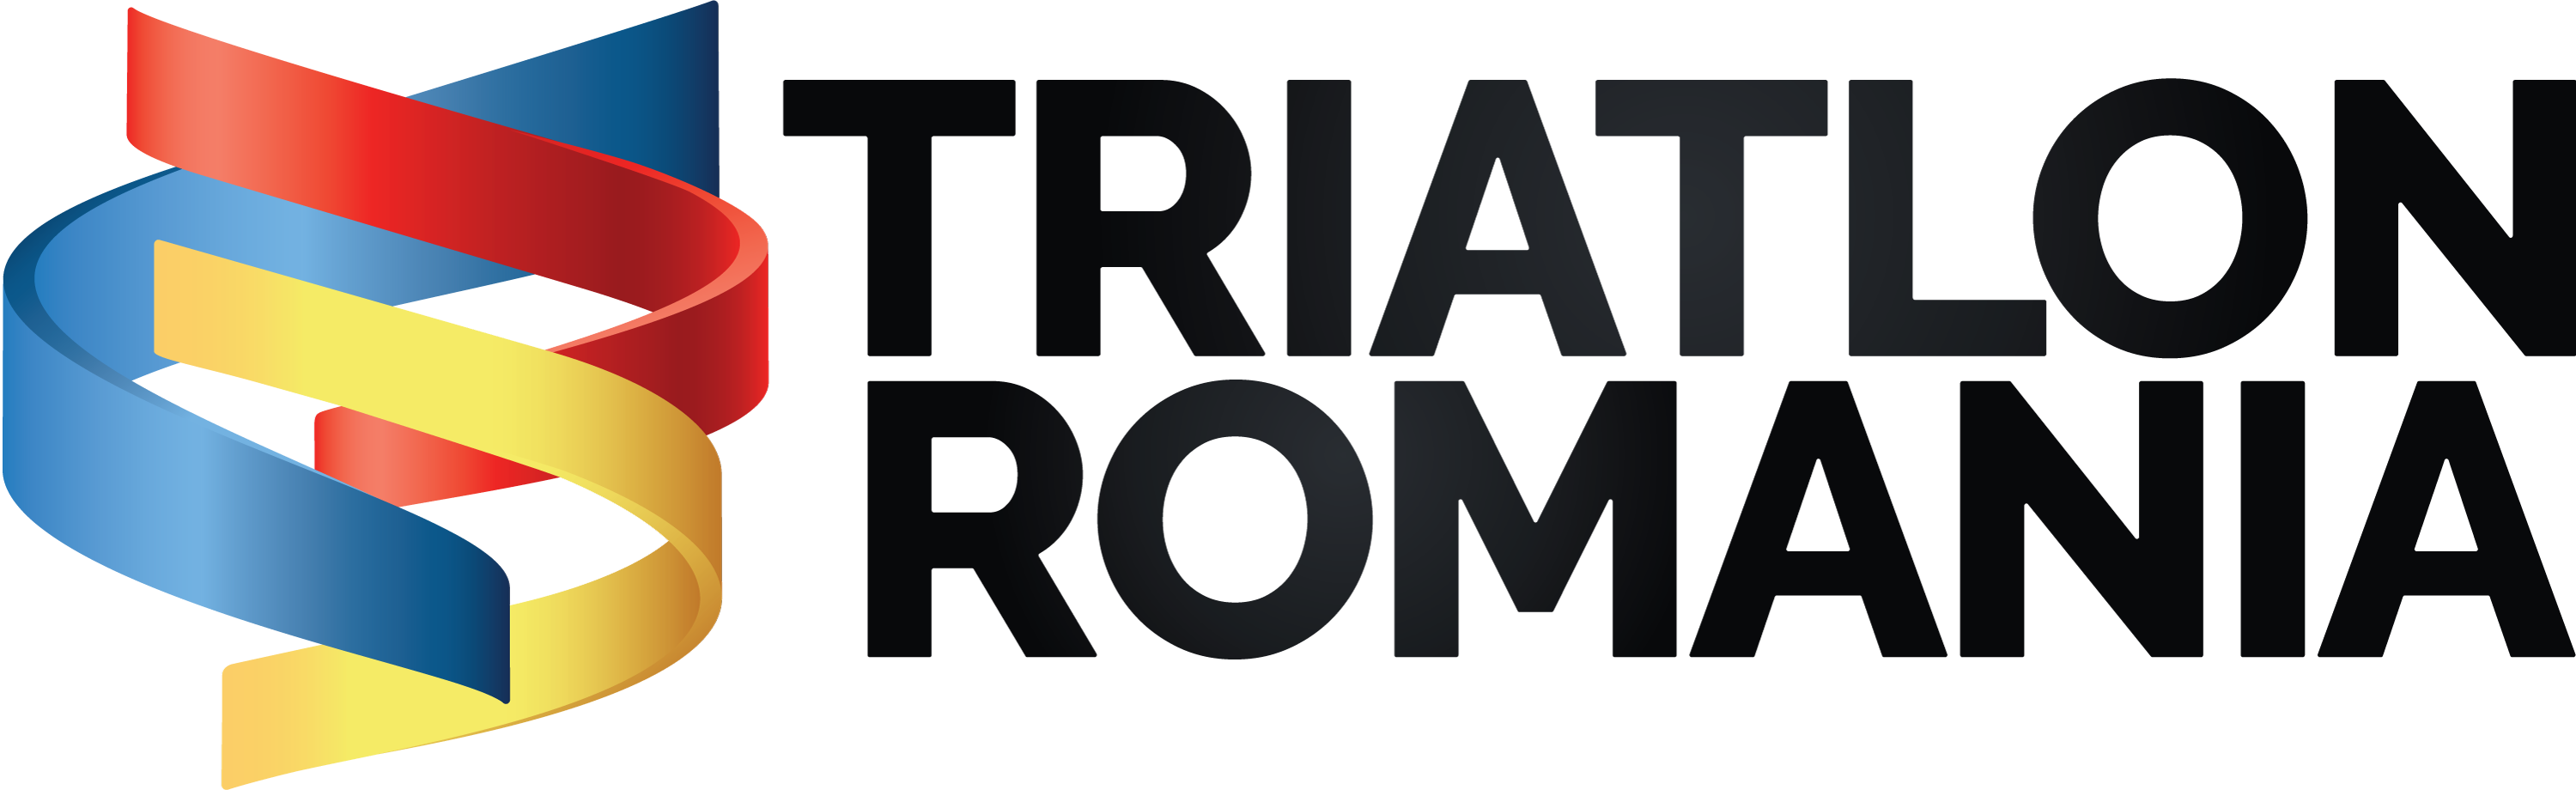 triatlon Romania